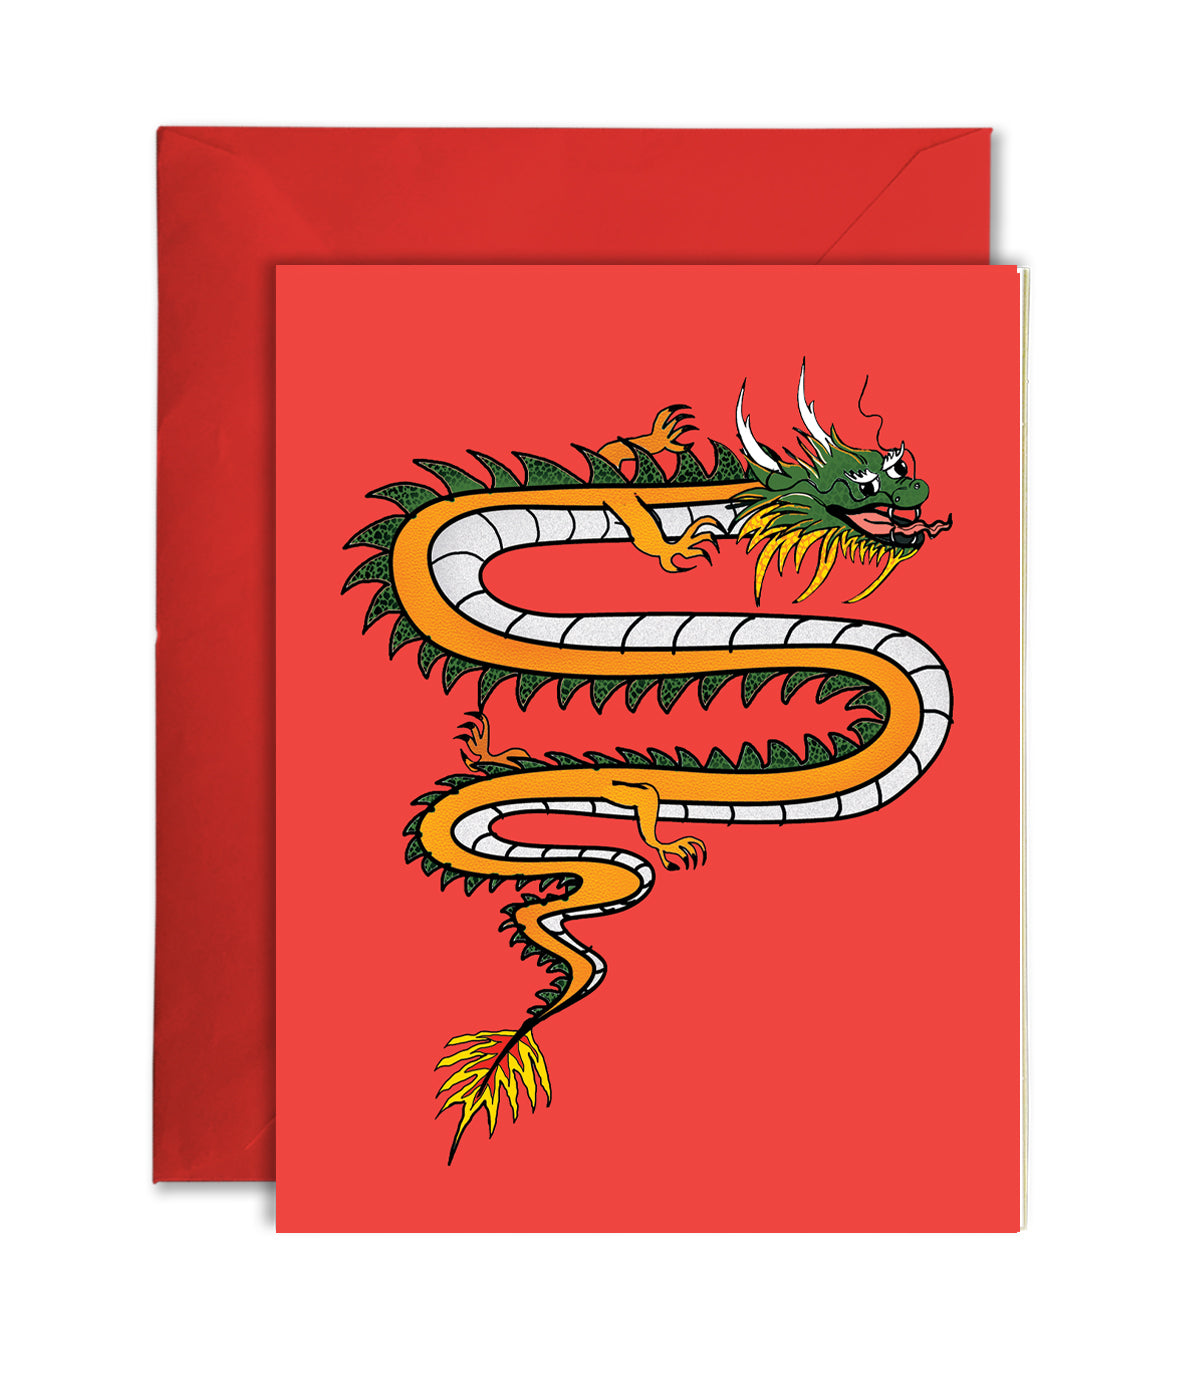 year of the dragon / lunar new year card